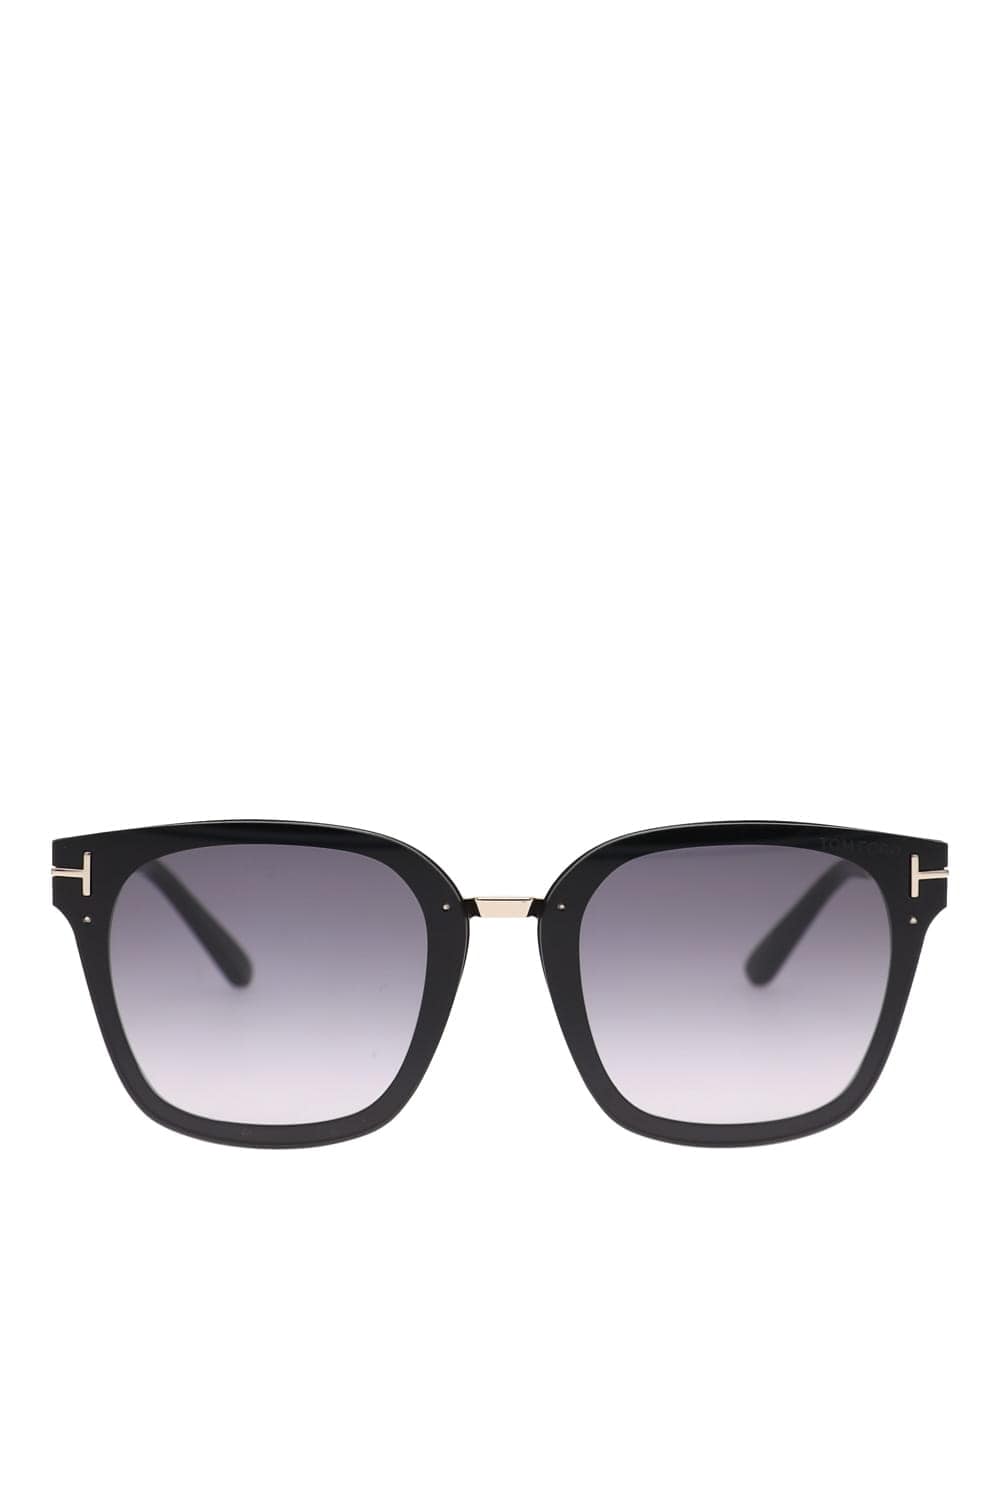 Tom Ford Eyewear FT1014 Shiny Black Sunglasses FT1014 Black/Smoke